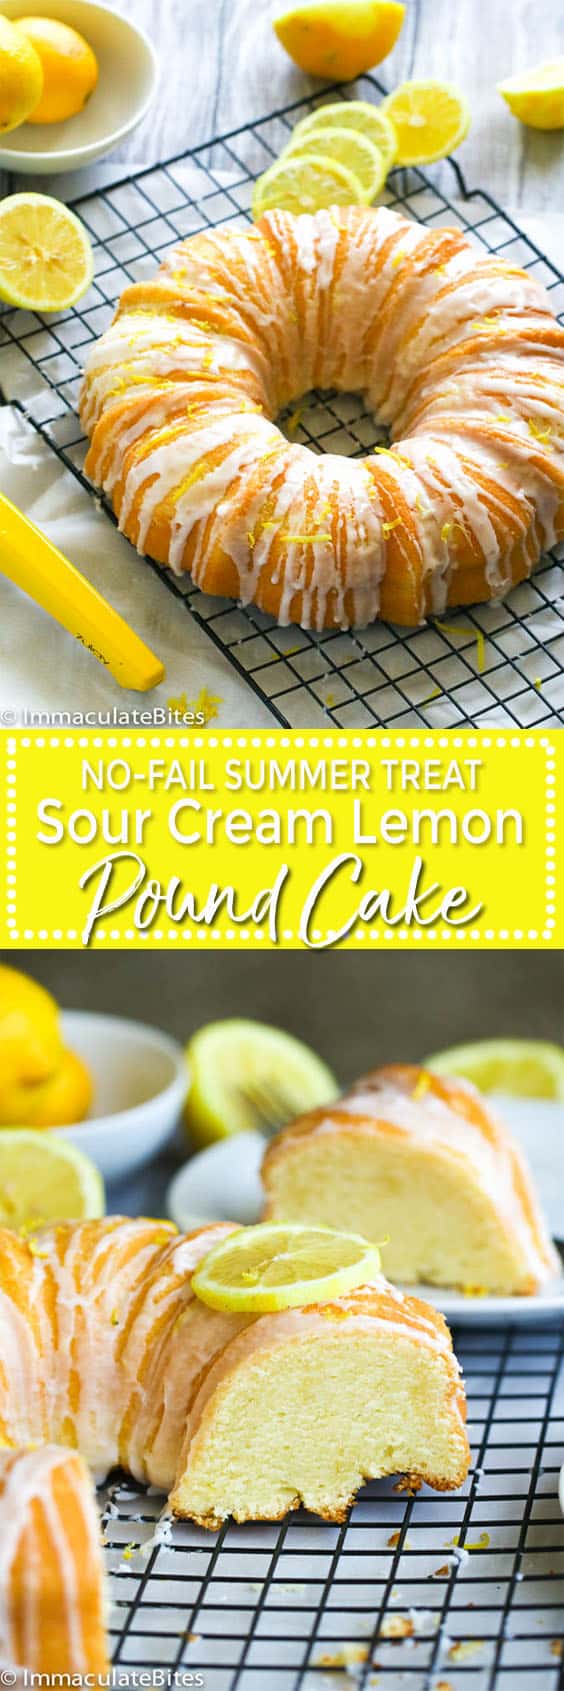 sour cream lemon pound cake